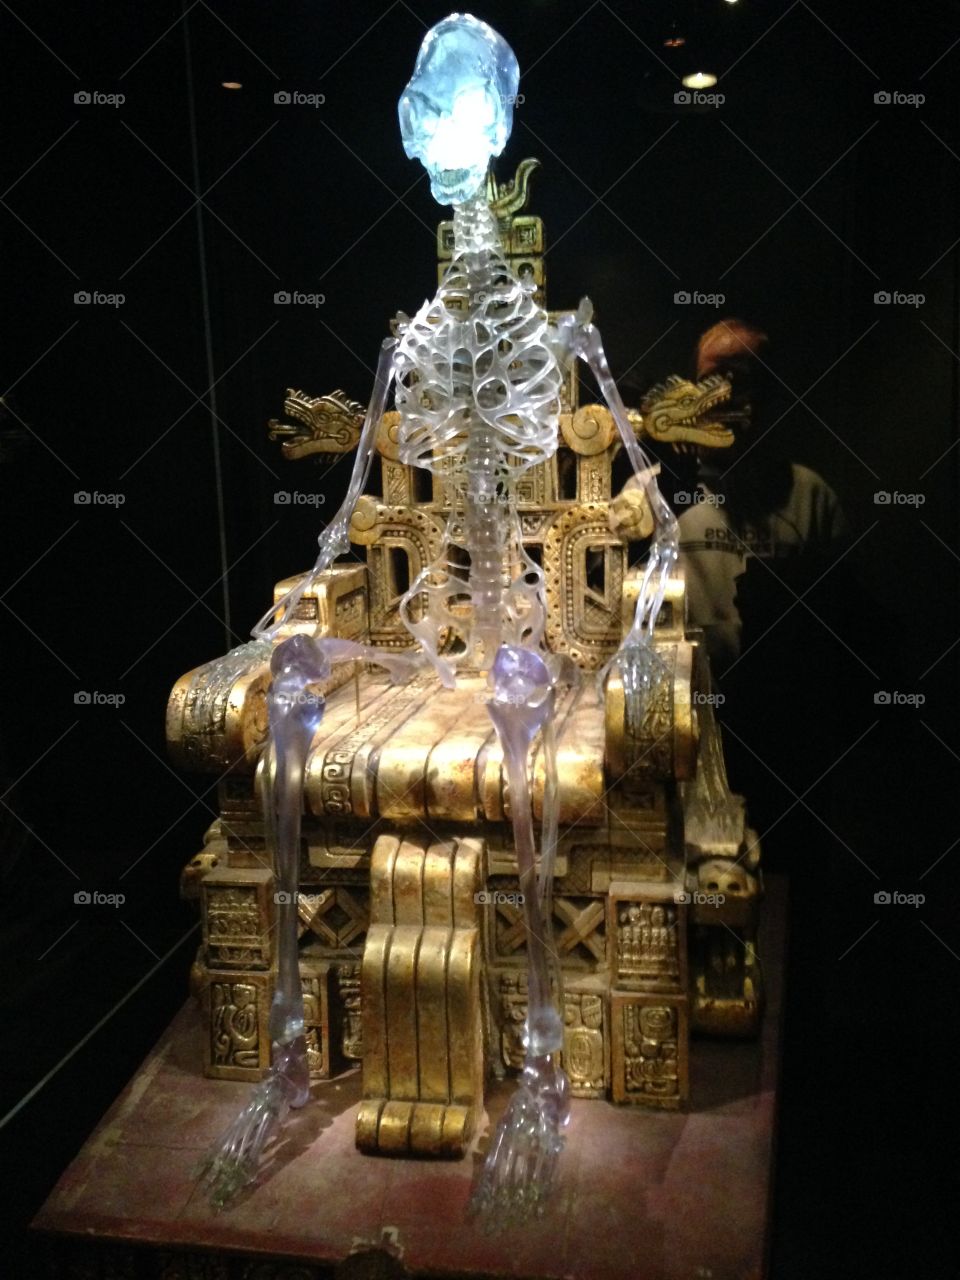 Complete crystal skull skeleton from the Indiana Jones movie